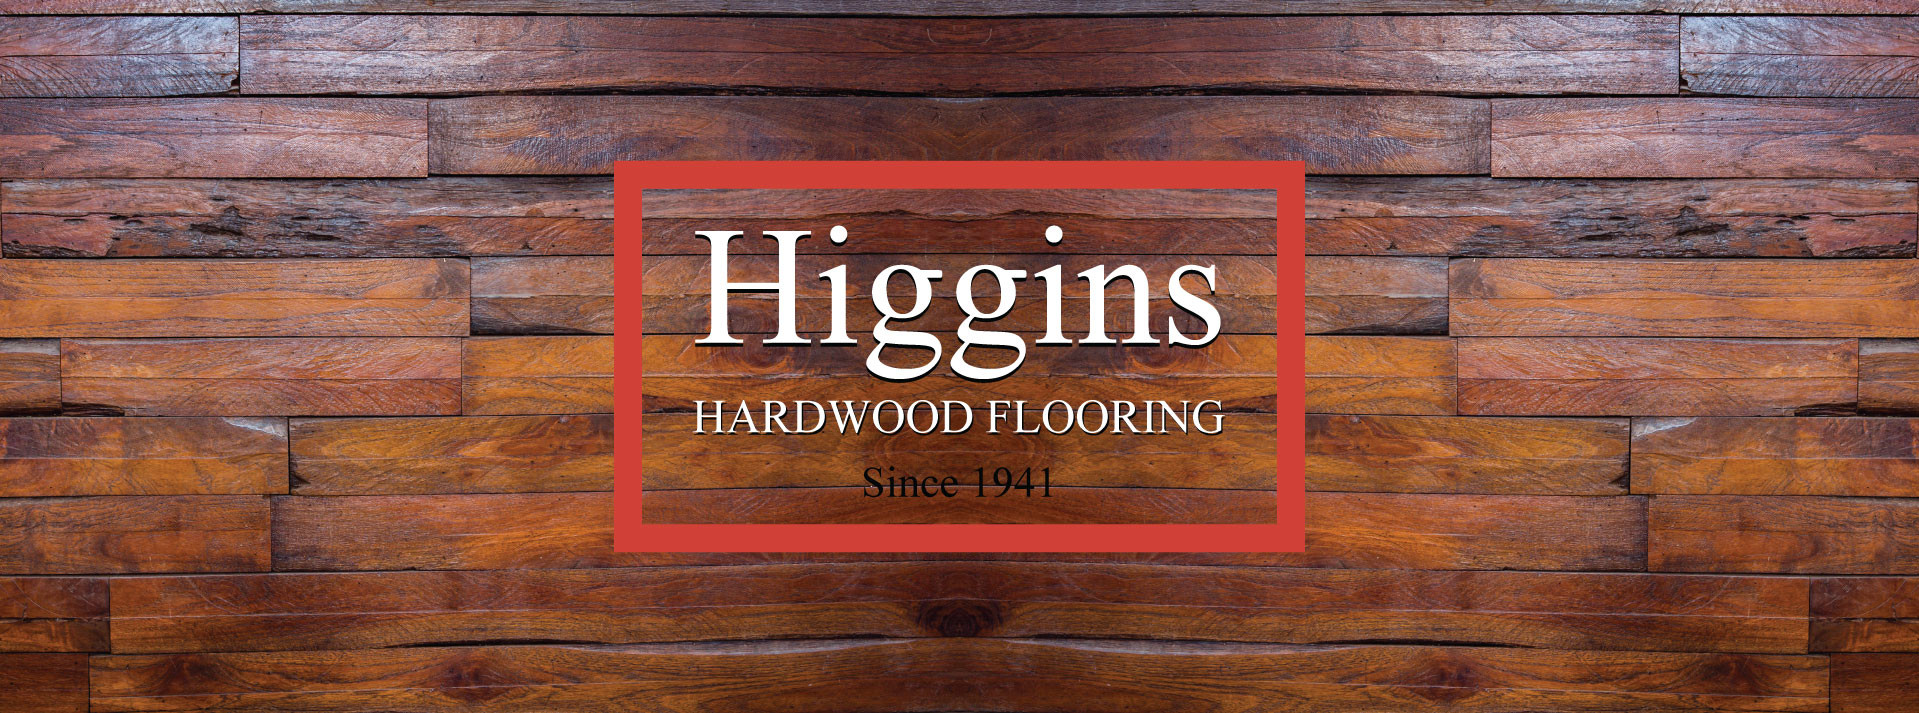 21 Fashionable Hardwood Flooring Manufacturers List 2024 free download hardwood flooring manufacturers list of higgins hardwood flooring in peterborough oshawa lindsay ajax within office hours